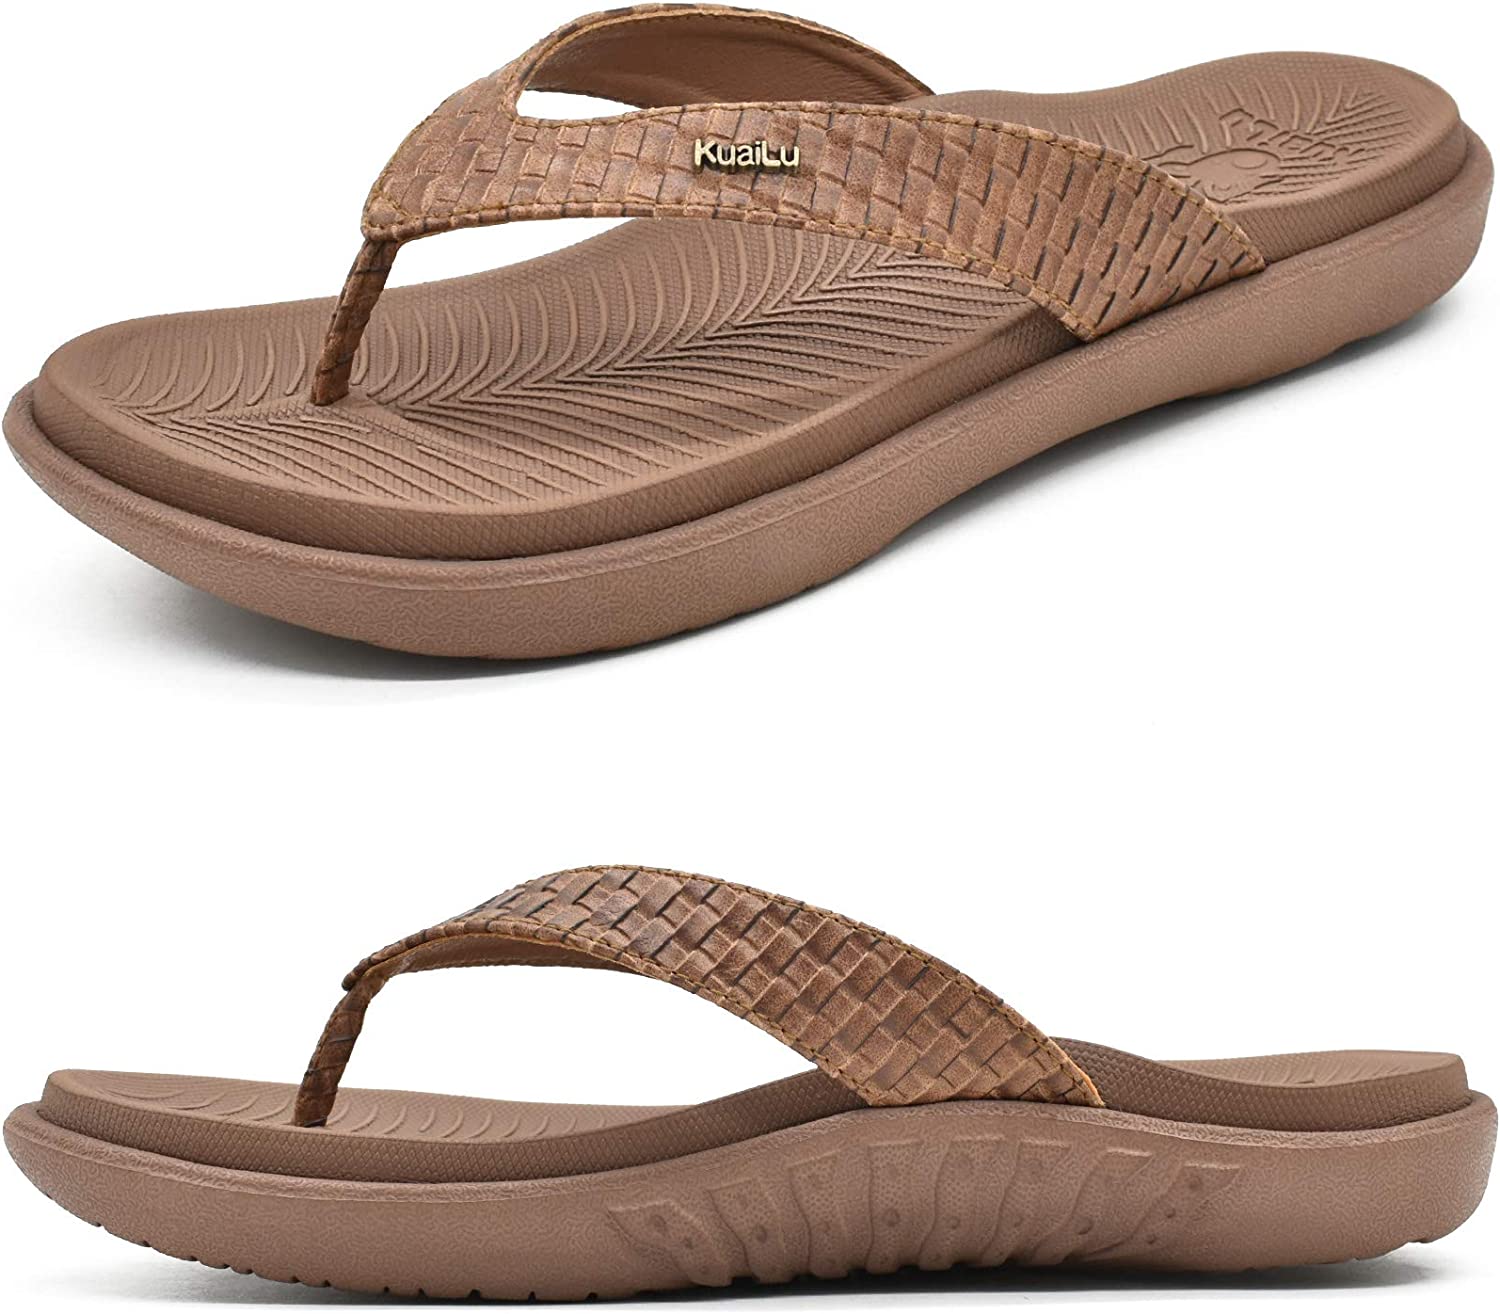 Buy KuaiLu Women's Non-Slip Casual Flip Flop Thong Sandals Online